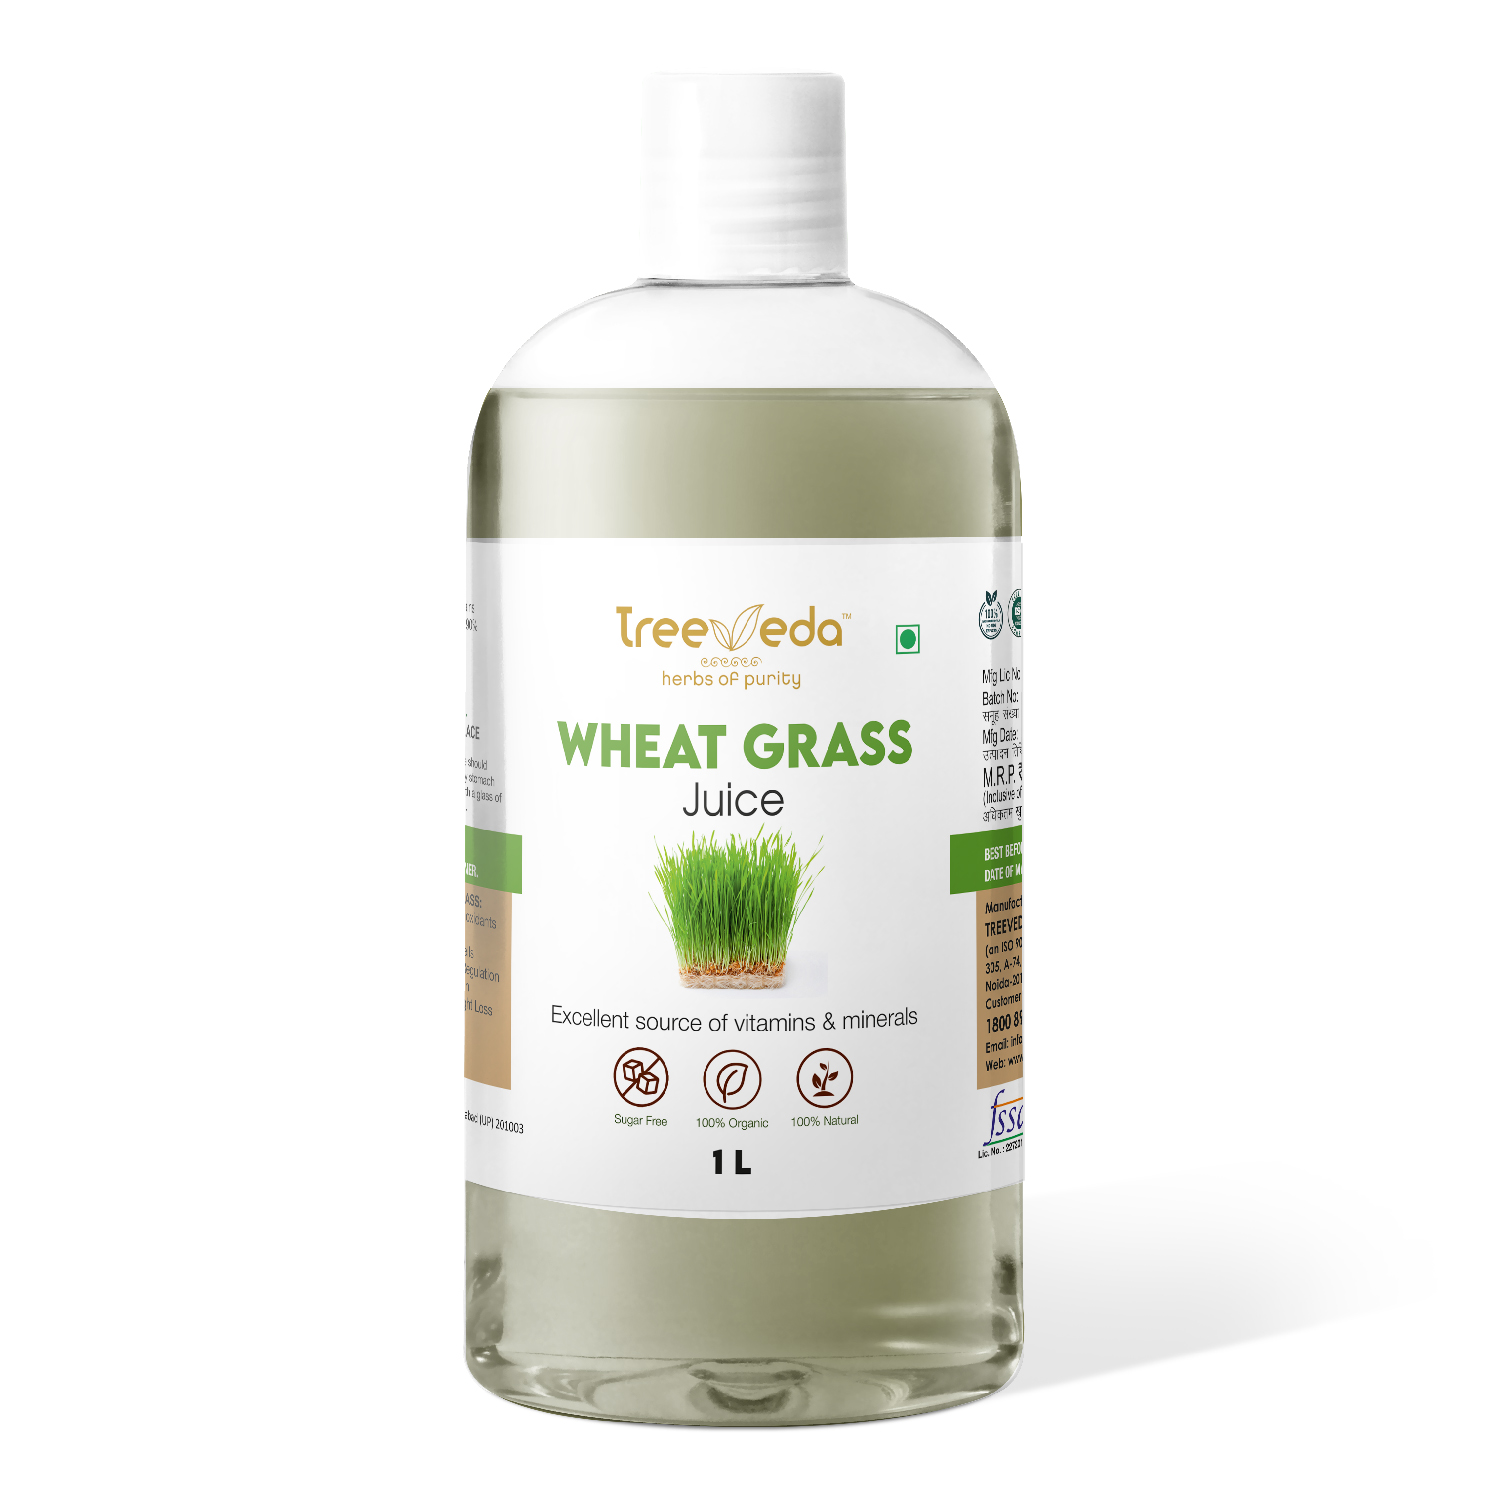 Treeveda wheat grass Juice